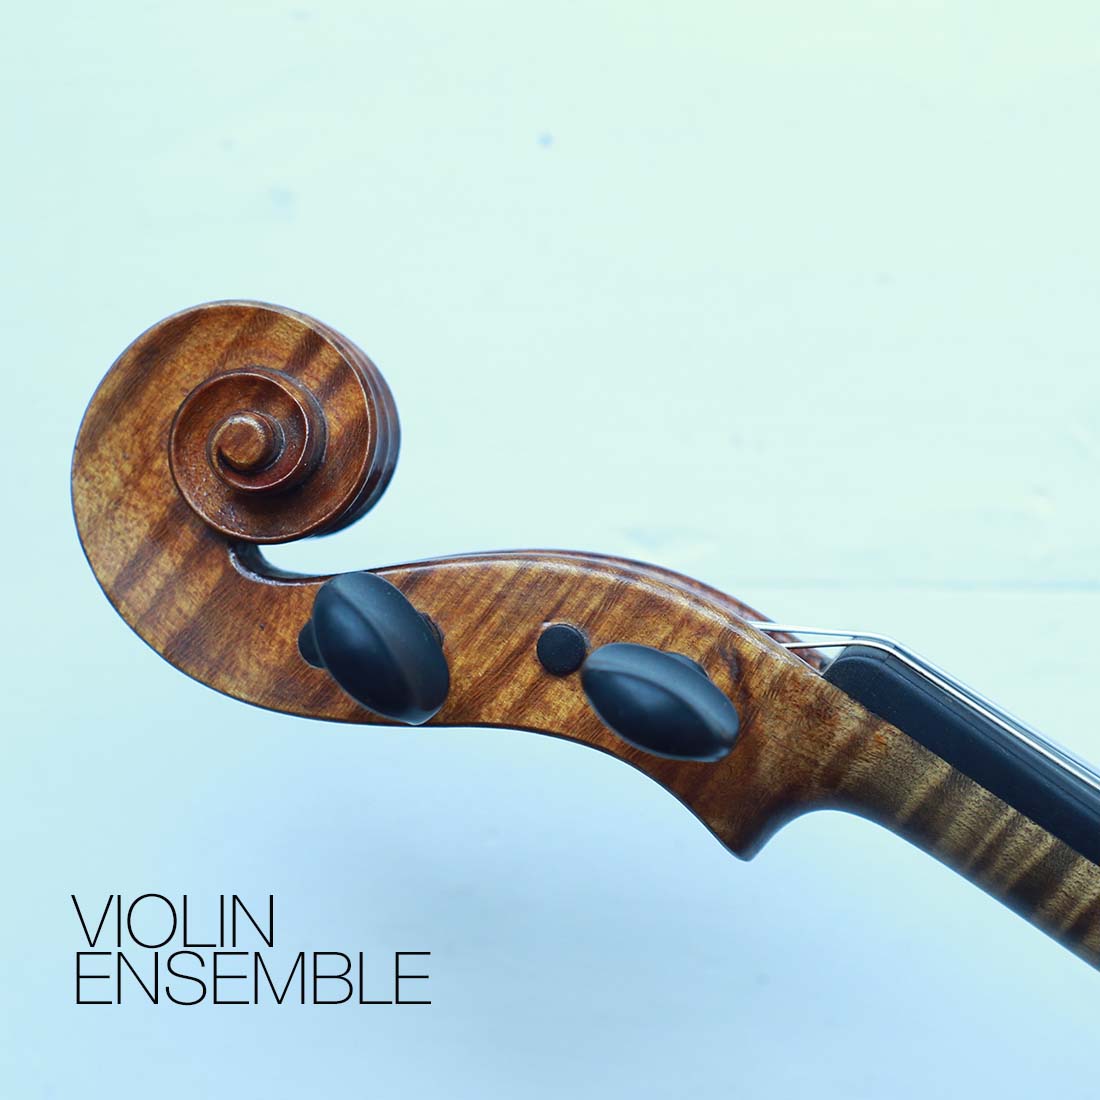 Violin-Ensemble-Cover-Art-Idea-3-1